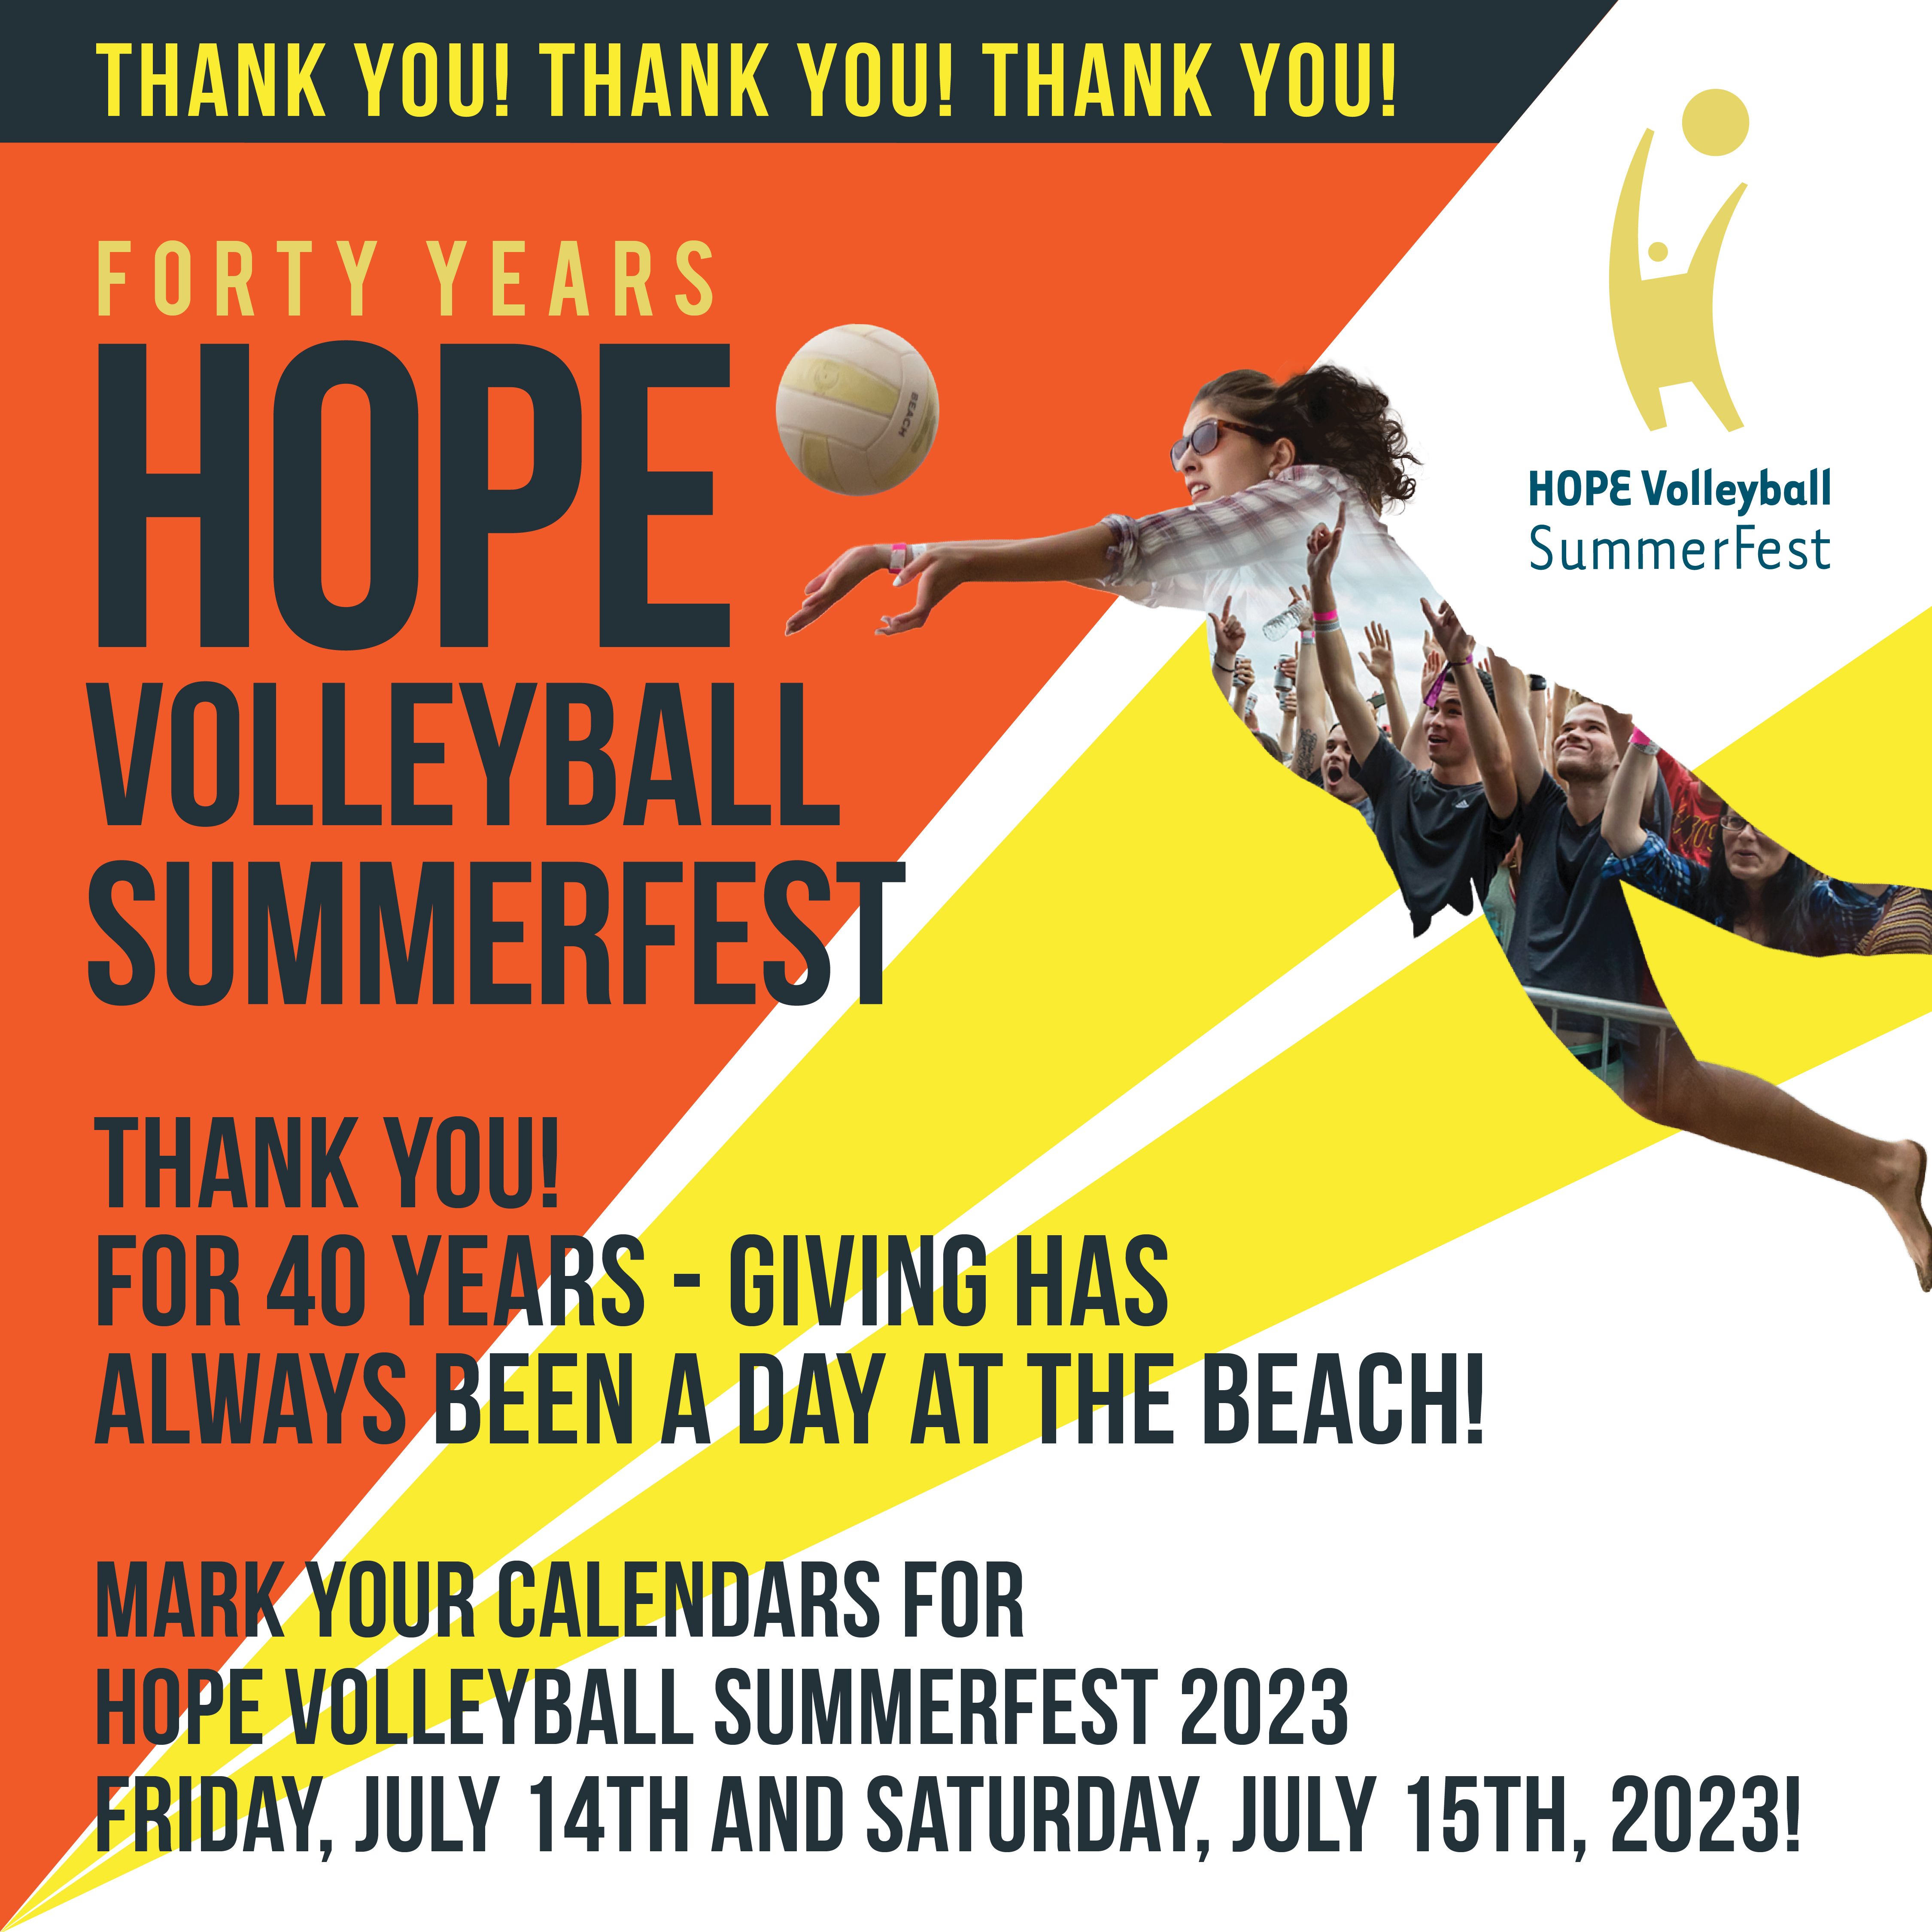 H.O.P.E. Ottawa's premier event Hope Volleyball SummerFest